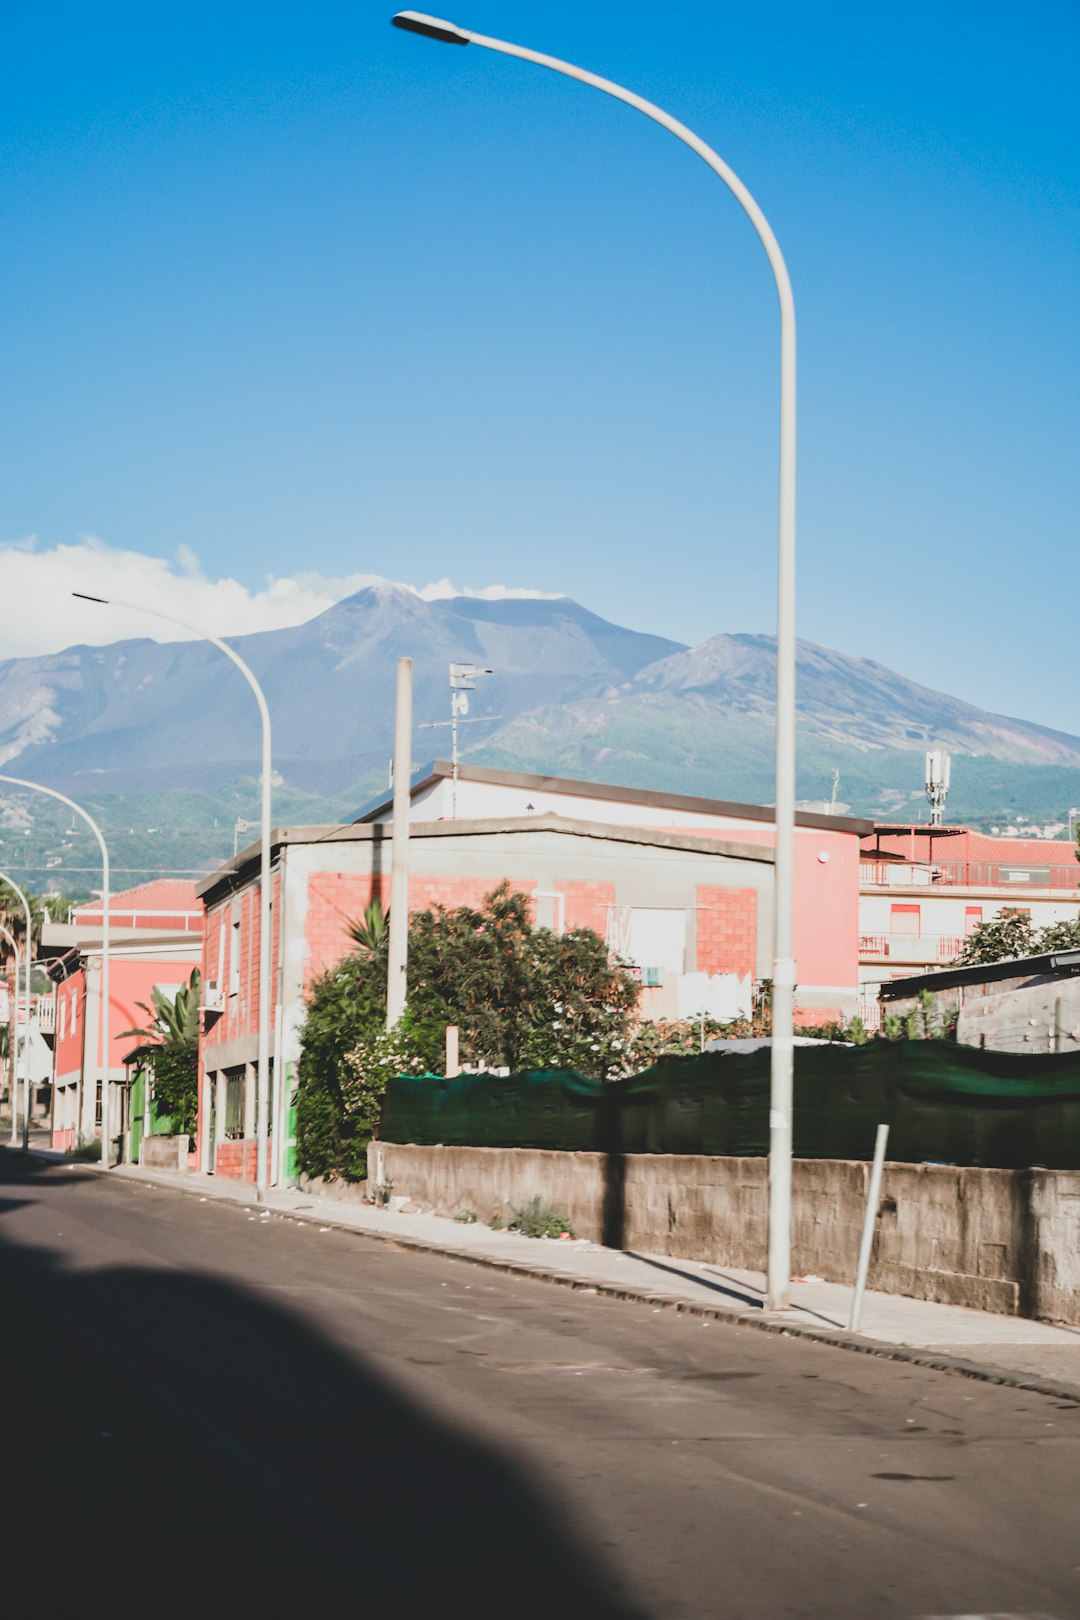 Town photo spot Mount Etna Messina